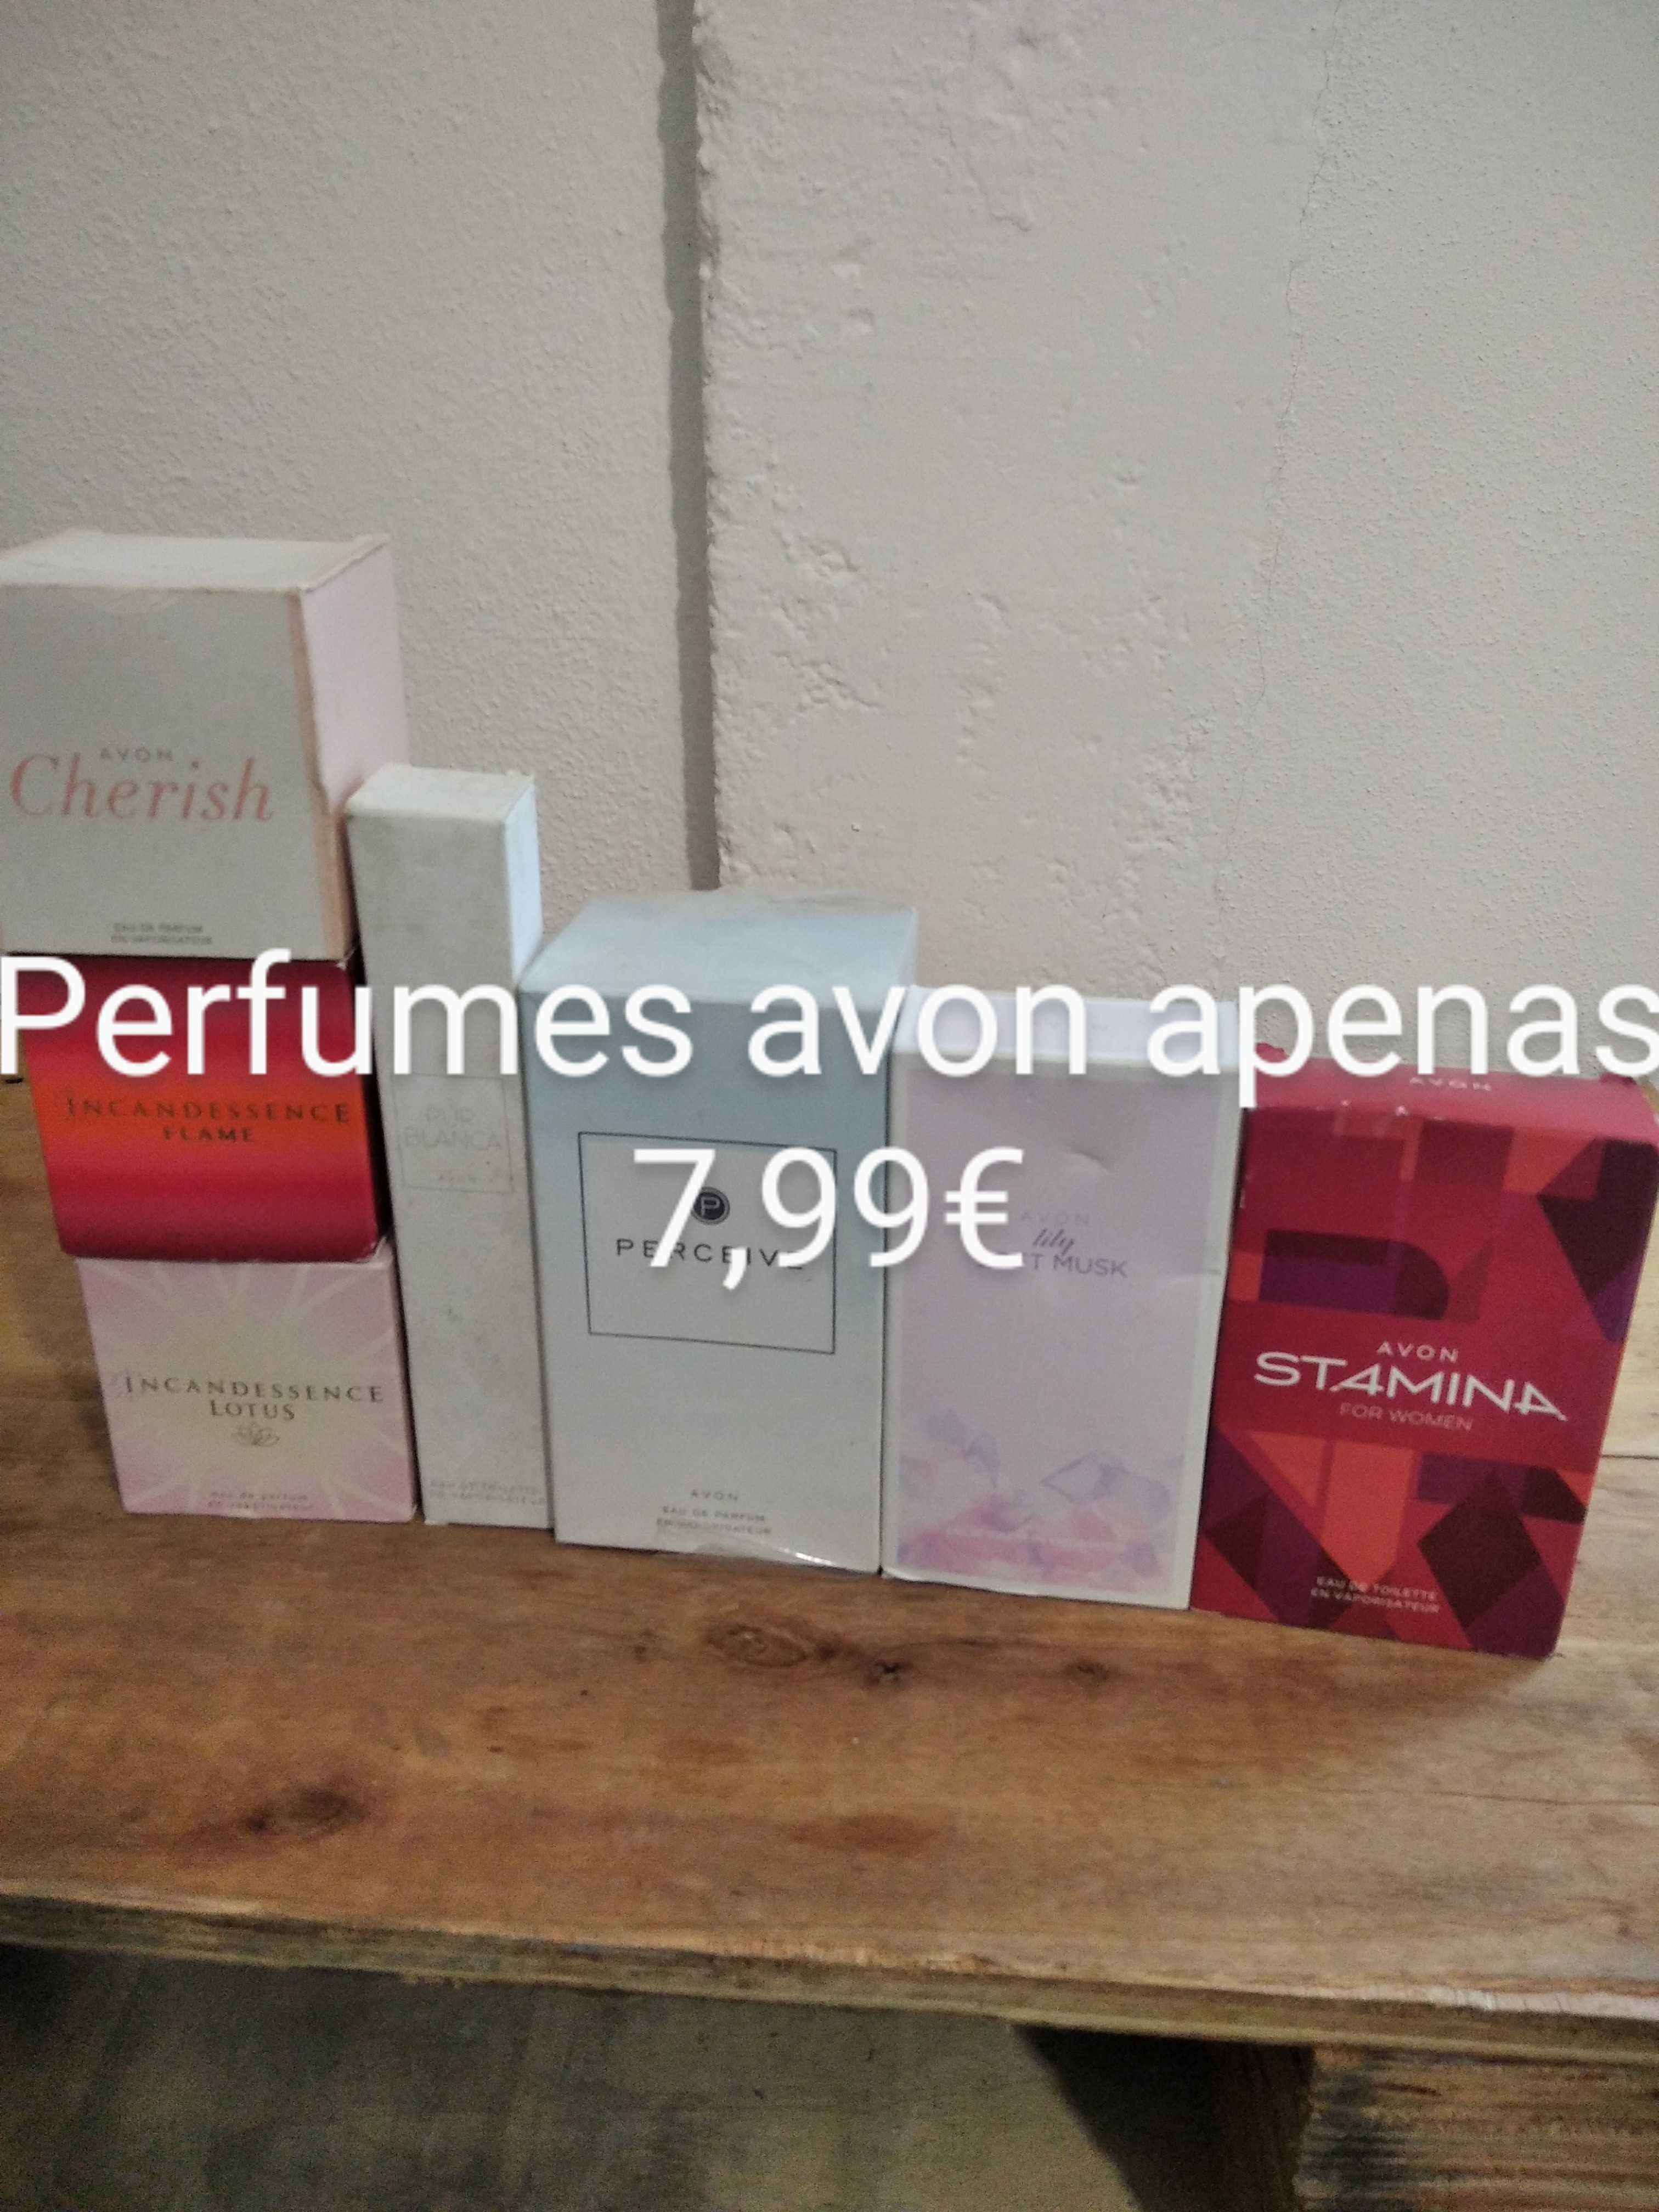 Perfumes avon baixo preço